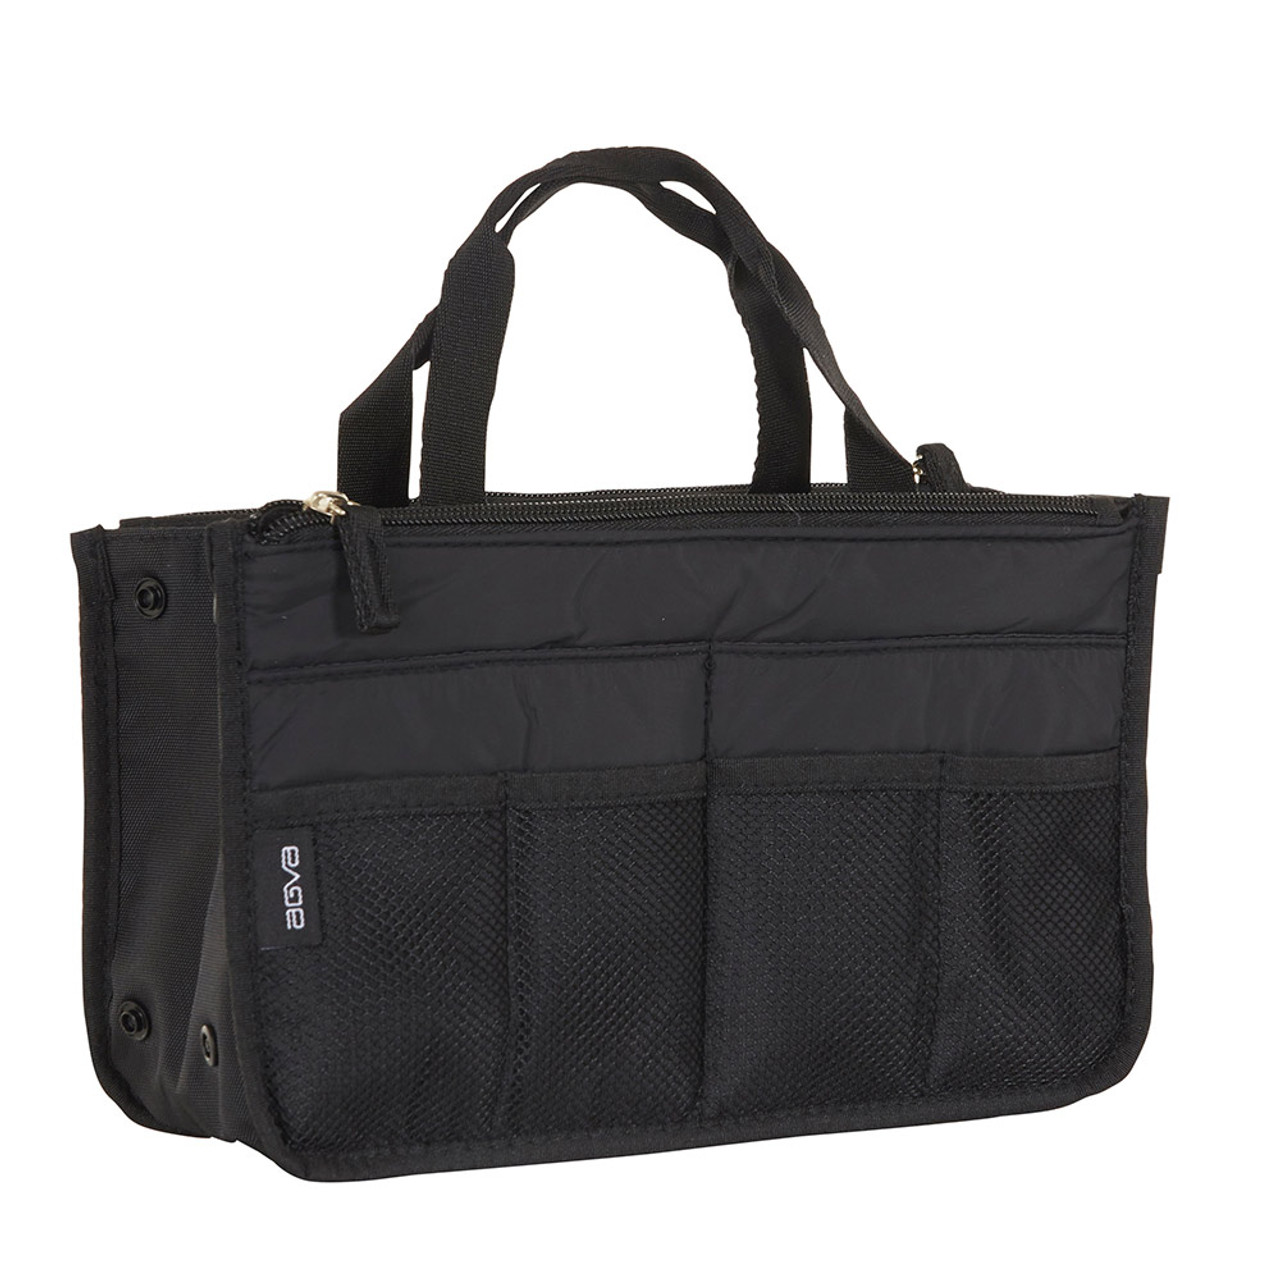 Urburn Handbag Insert Organiser - Black